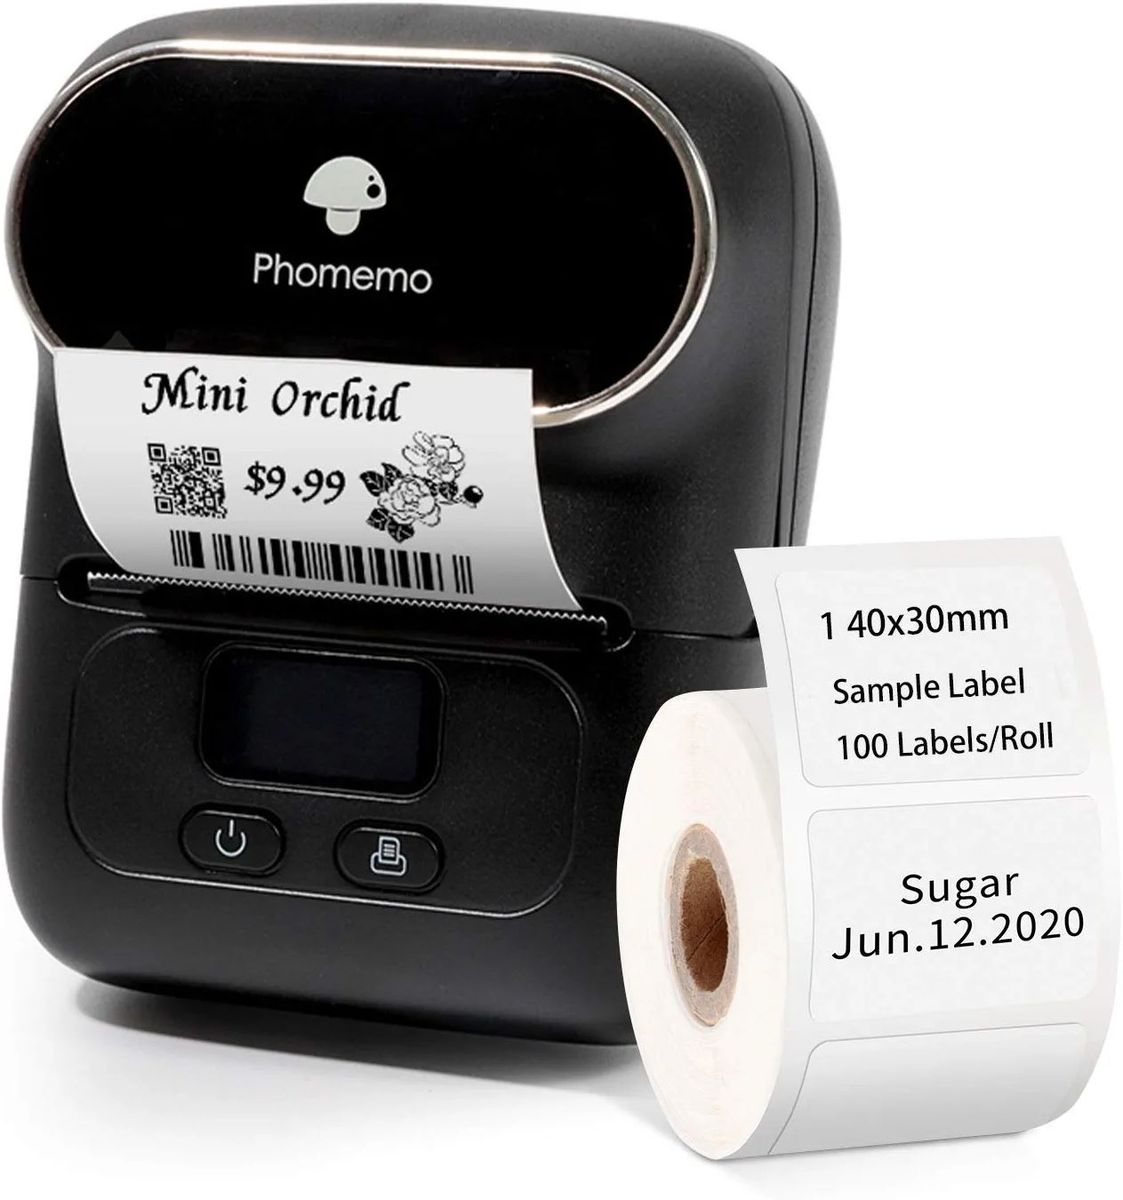 Phomemo M110 Label Maker- Portable Mini Bluetooth Thermal Label